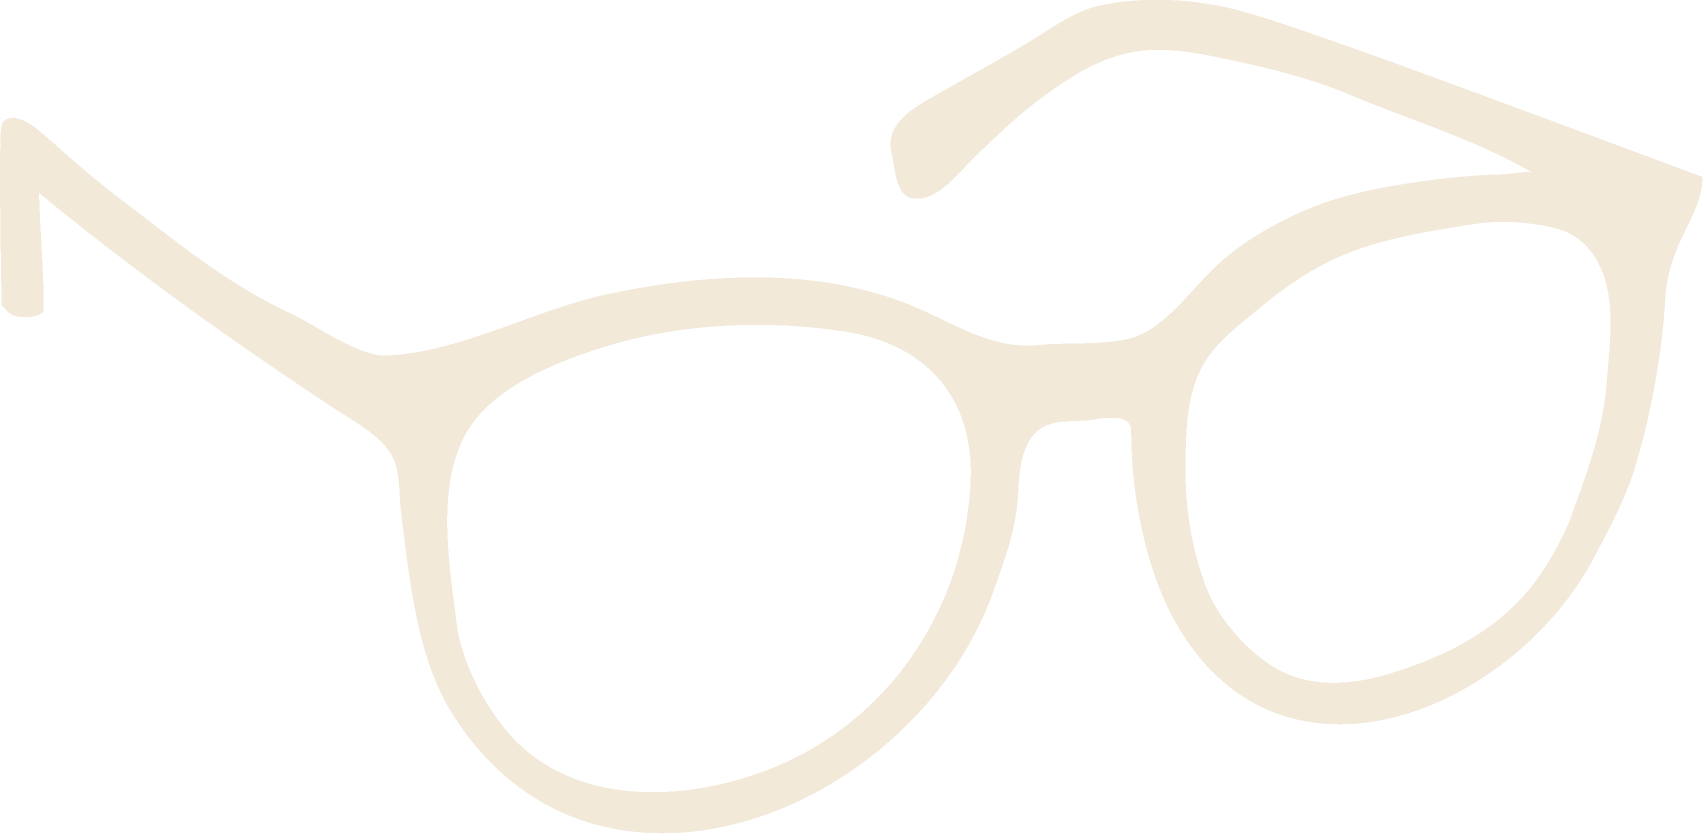 Illustration of eyeglasses